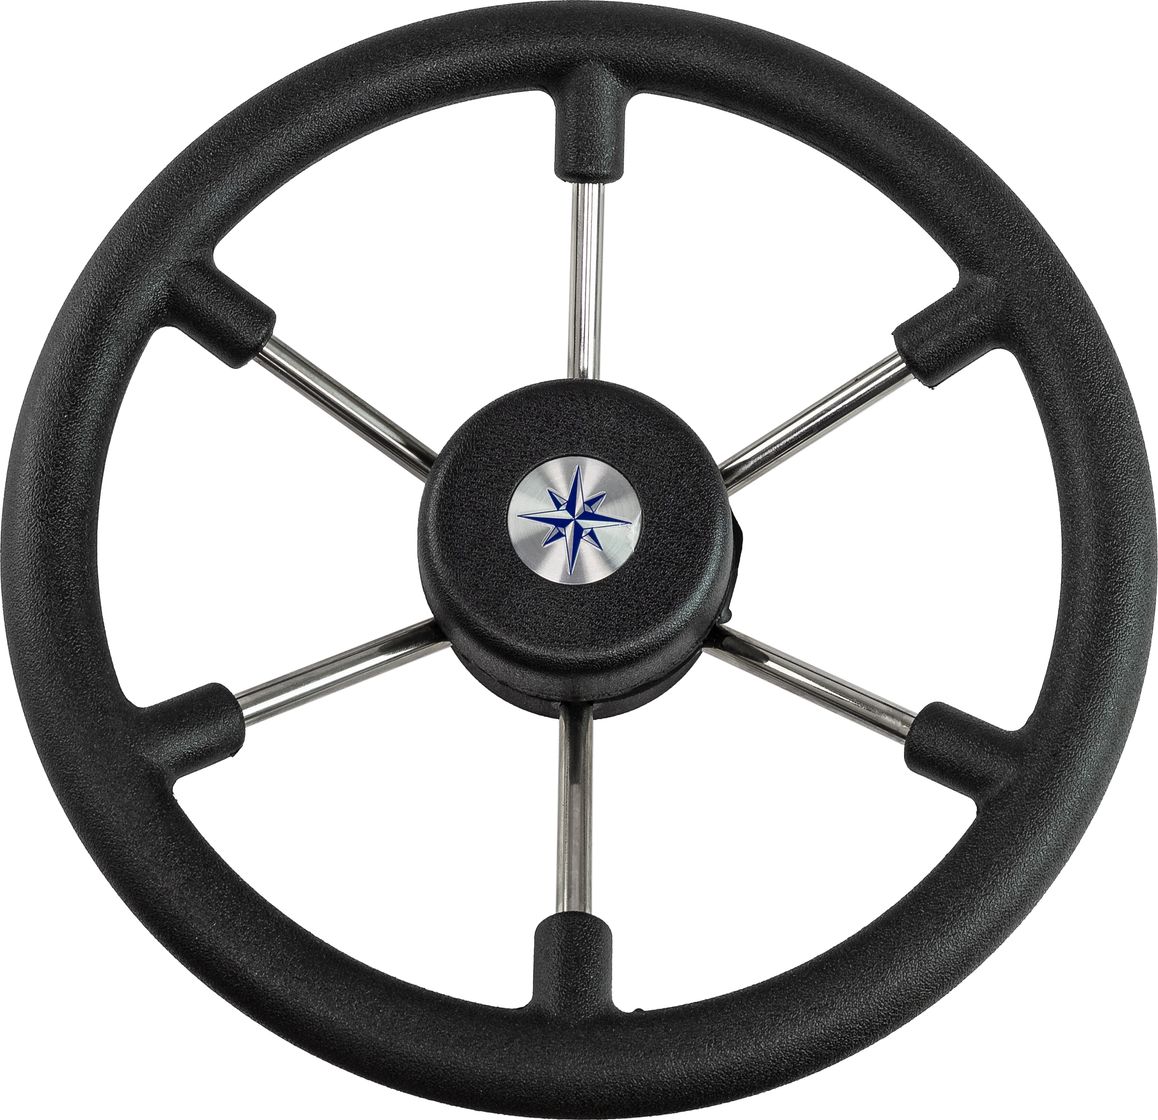 Рулевое колесо LEADER TANEGUM черный обод серебряные спицы д. 330 мм VN7330-01 заглушка декоративная для рулевых колес leader tanegum серая vn00010 03